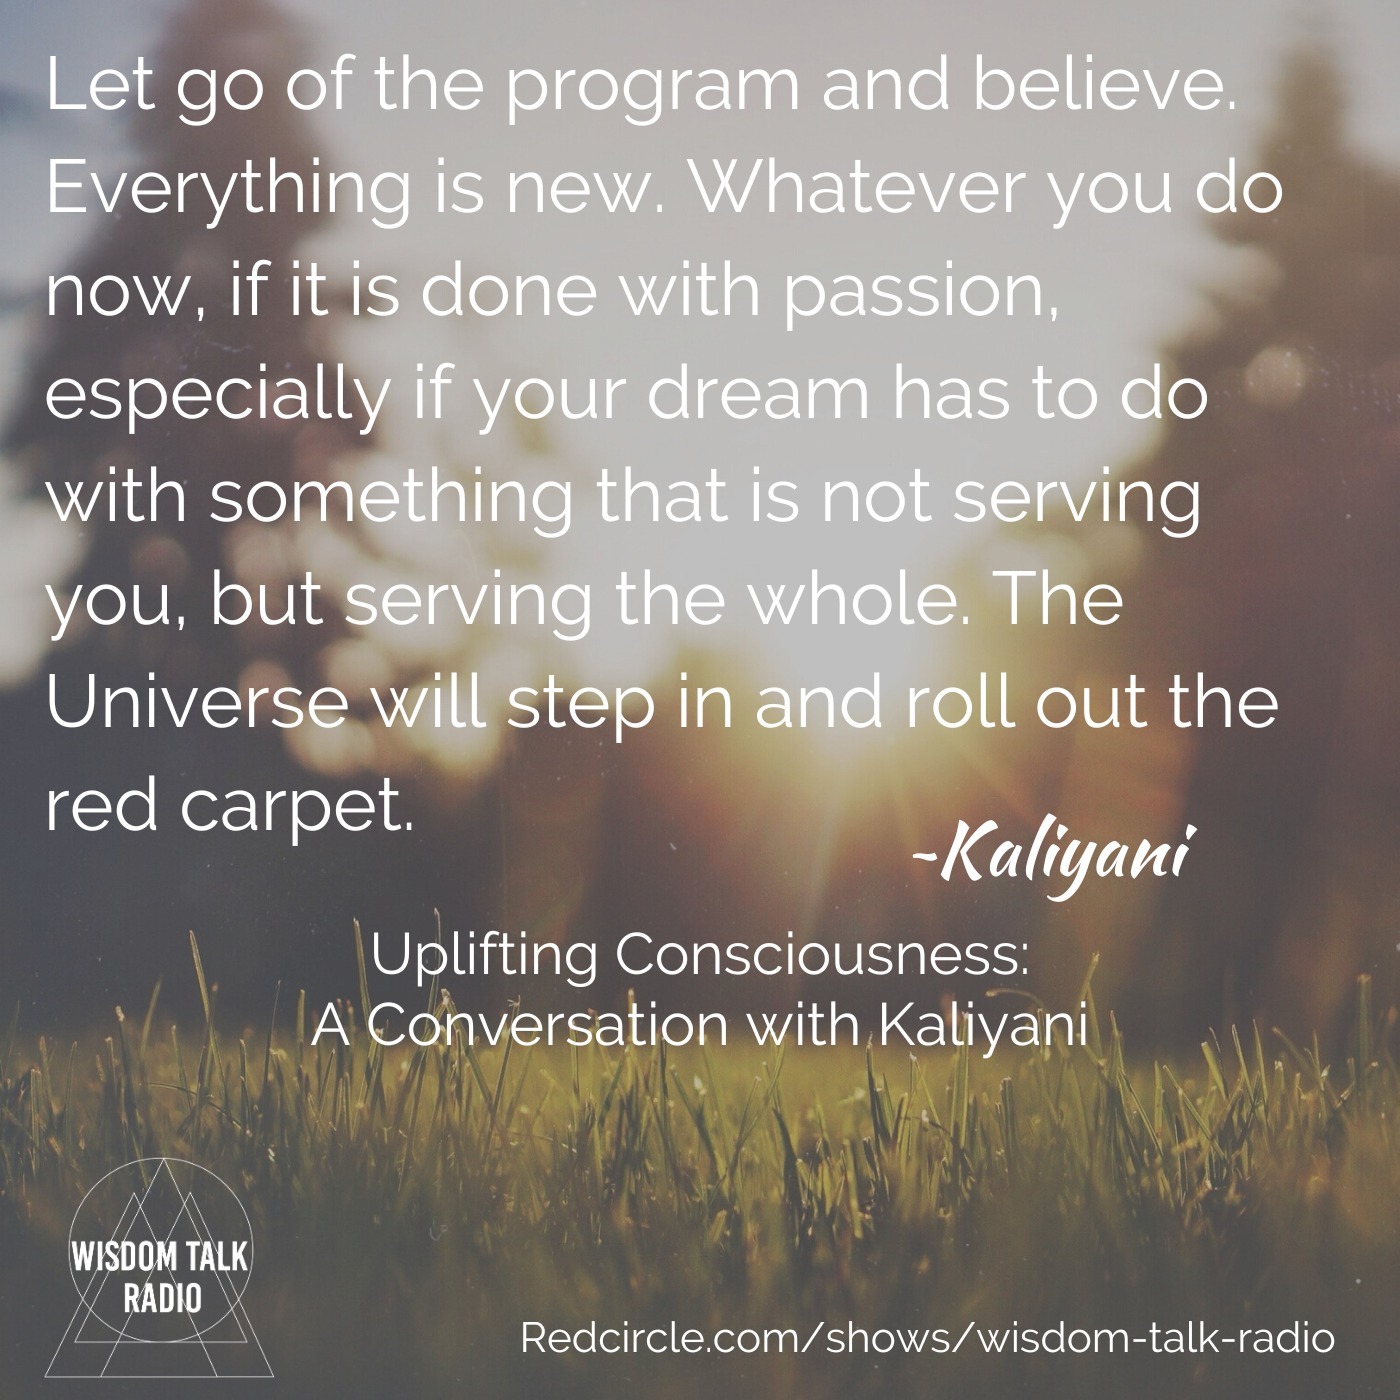 Uplifting Consciousness: a Conversation with Kaliyani